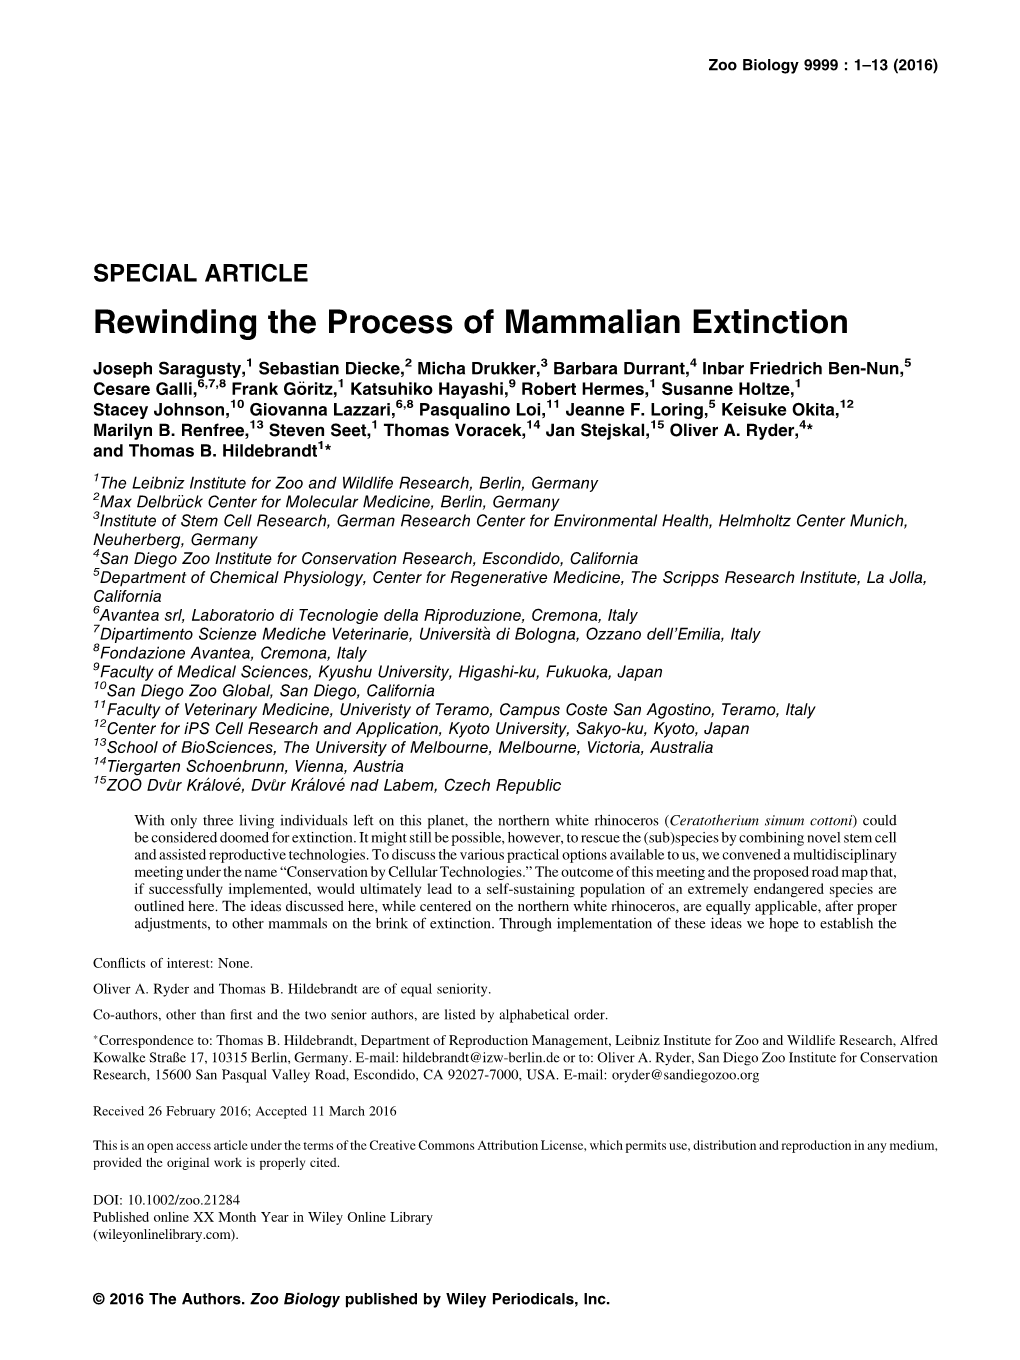 Rewinding the Process of Mammalian Extinction